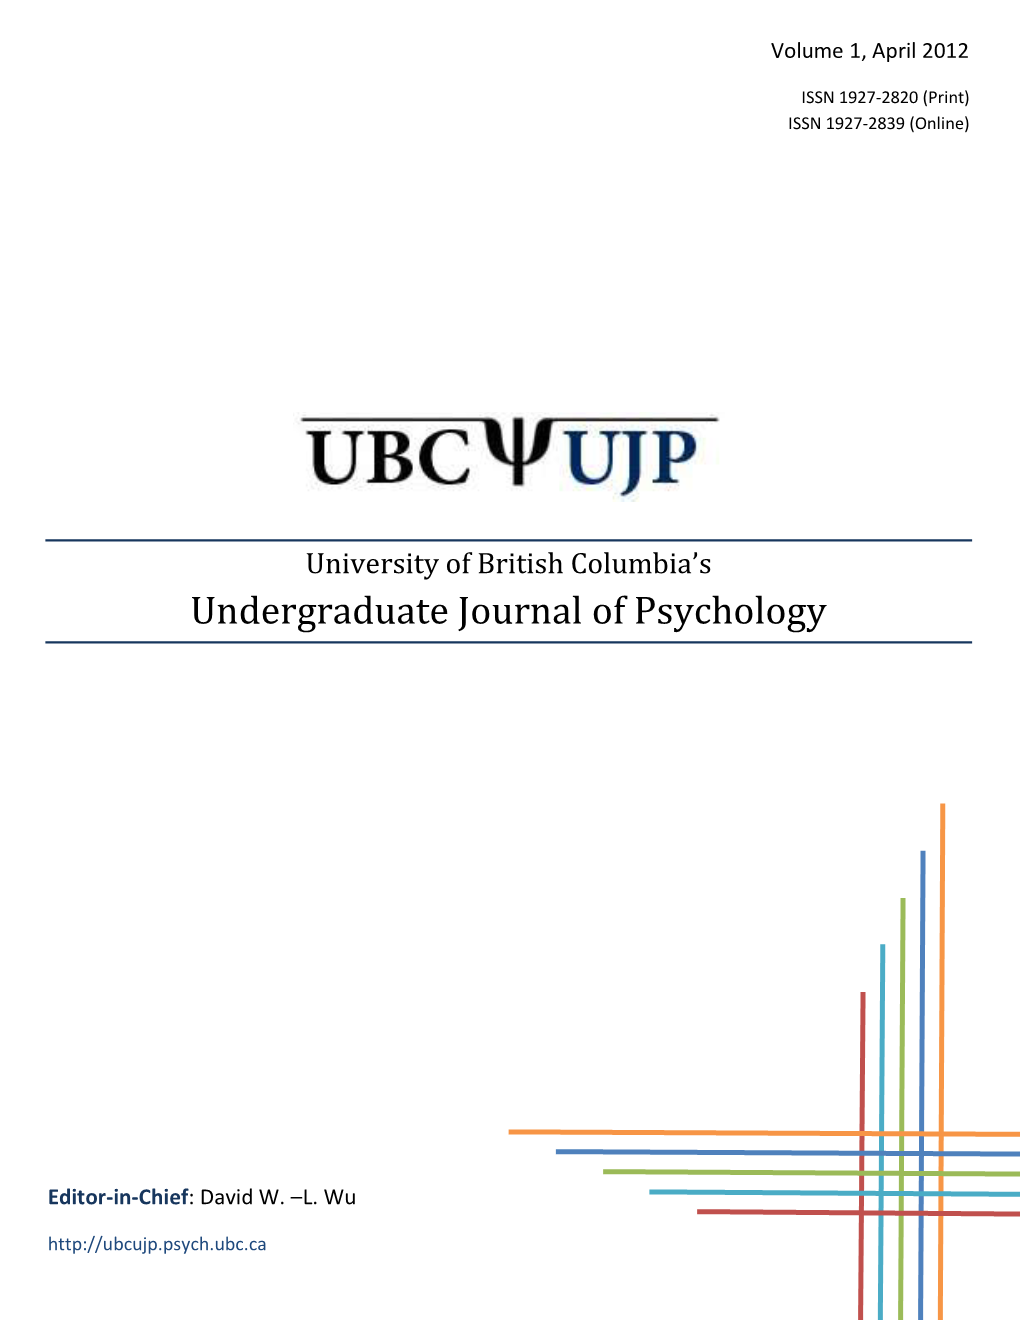 Undergraduate Journal of Psychology University of British Volumecolumbia’S 1 Undergraduate April 2012 Journal of Psychology Volume 1 April 2012